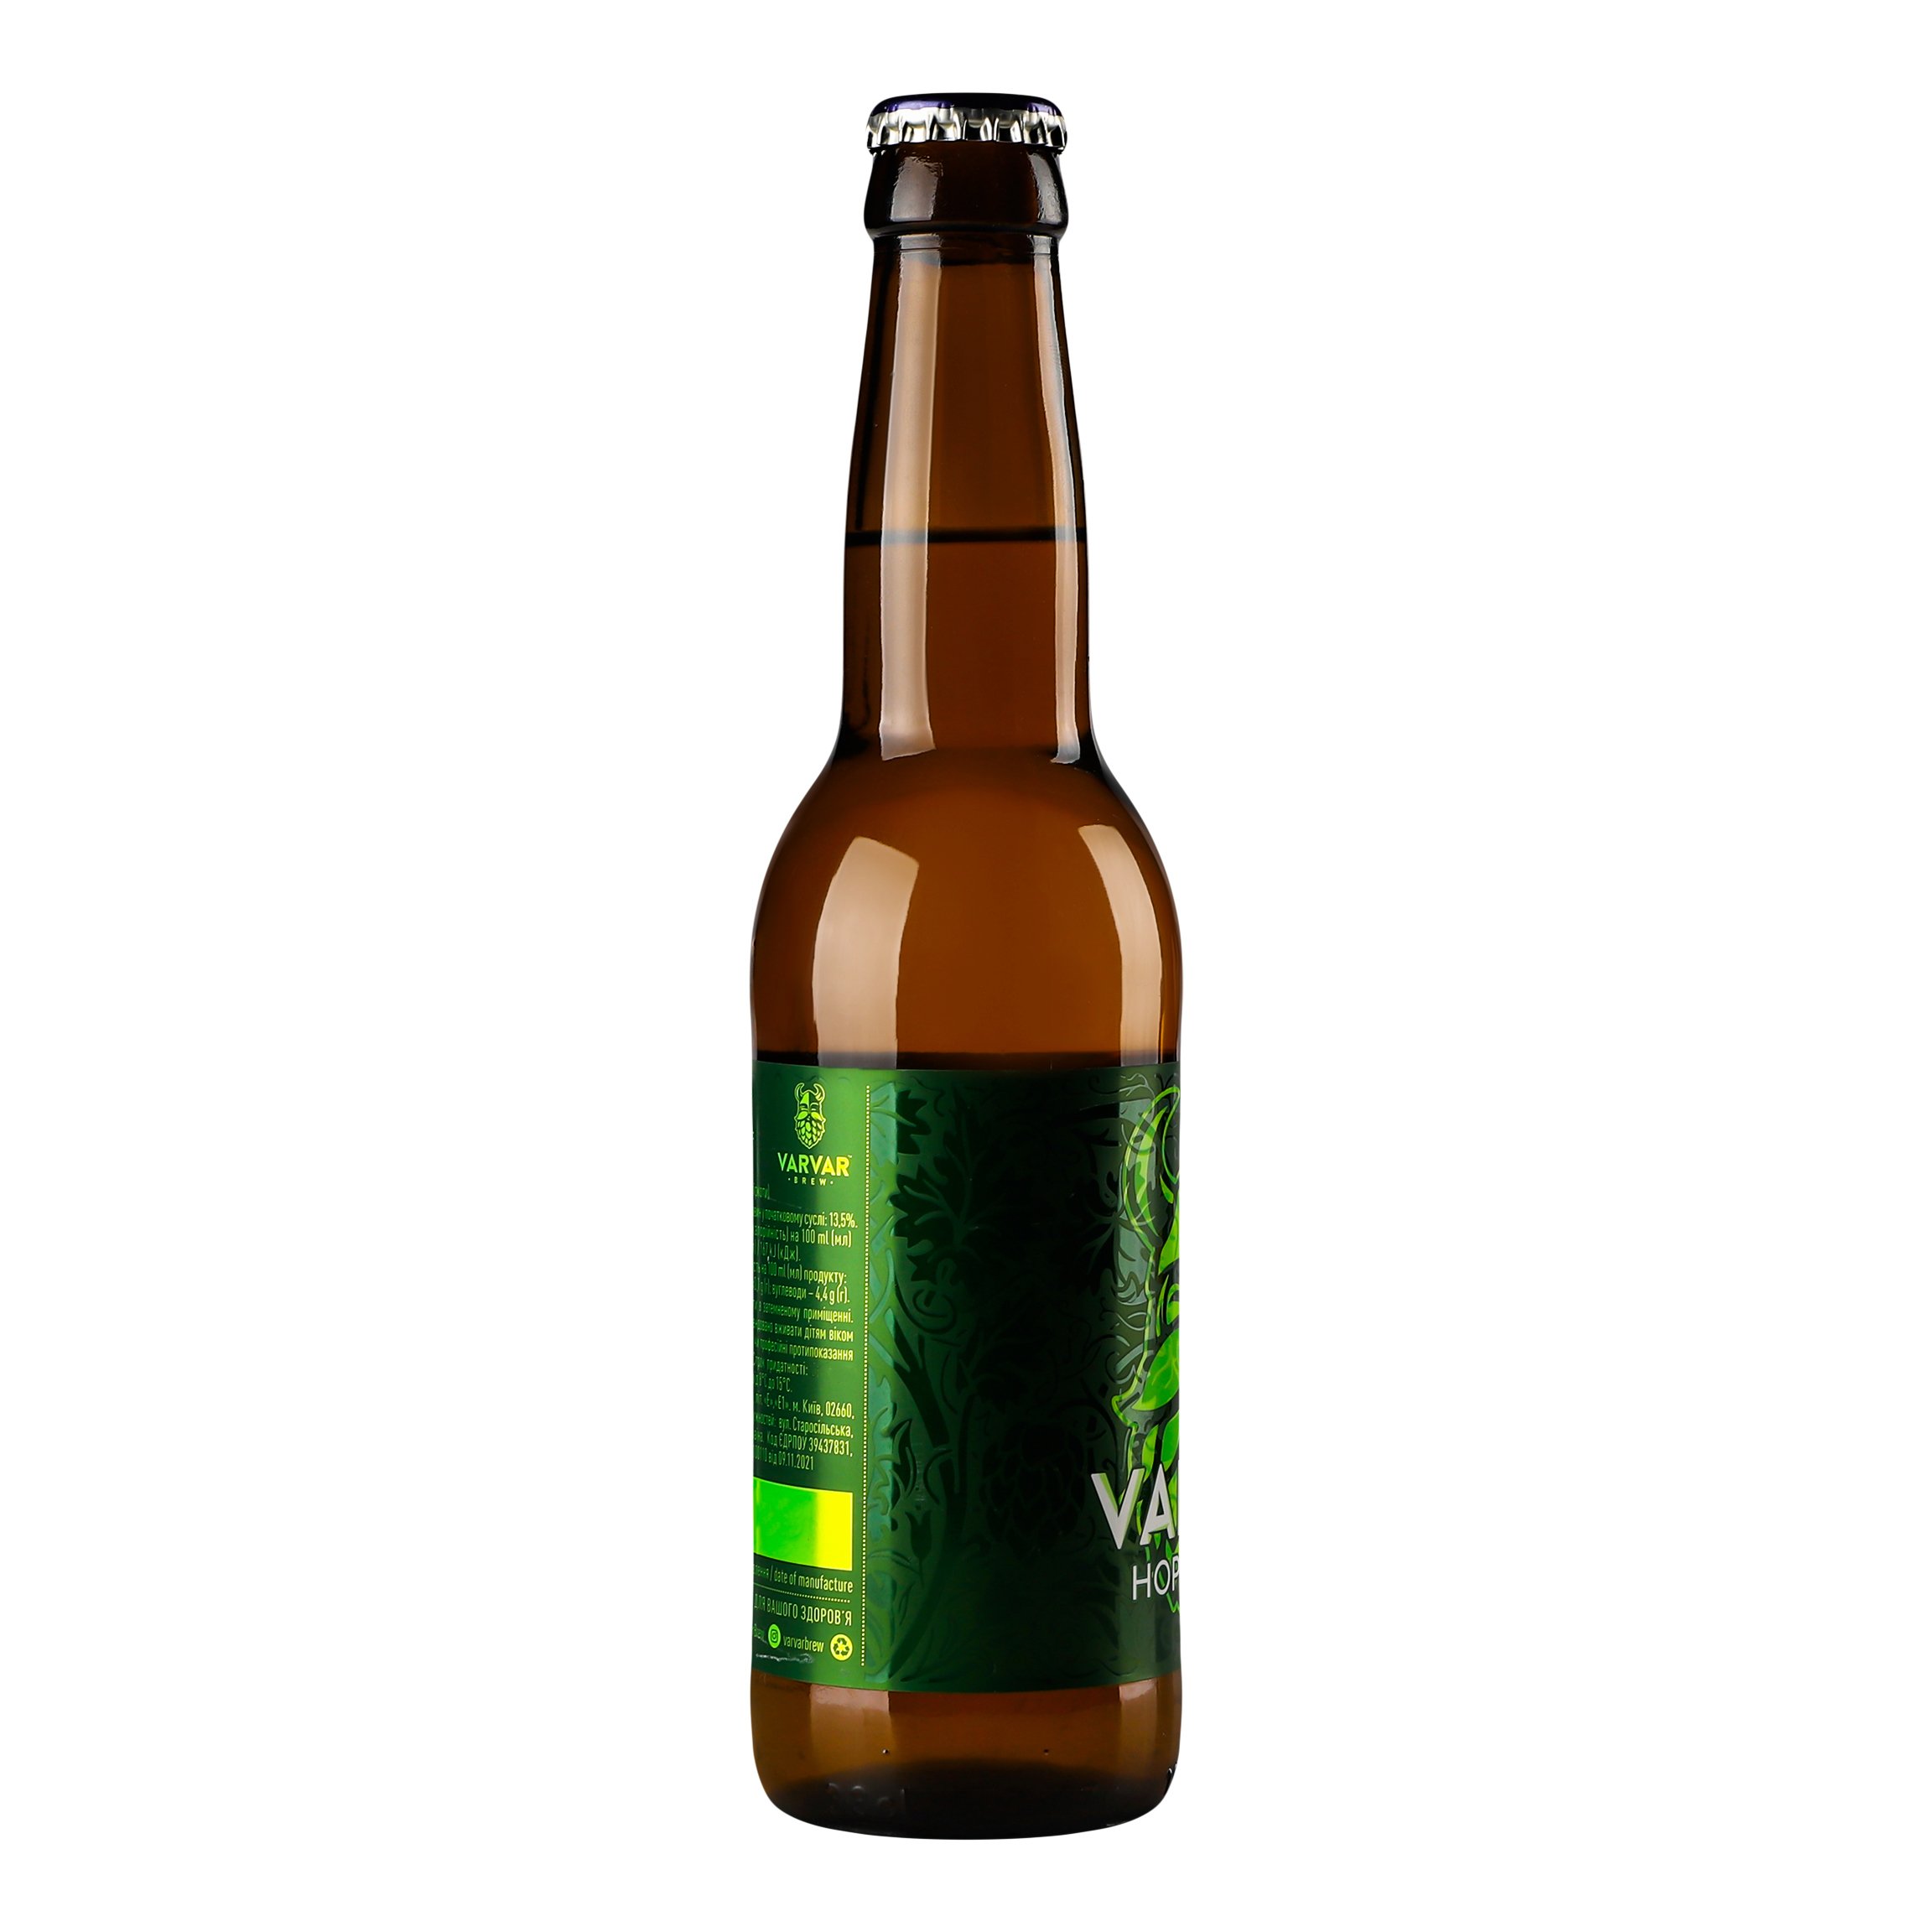 Пиво Varvar Hoppy Lager, світле, нефільтроване, 5,6%, 0,33 л - фото 3